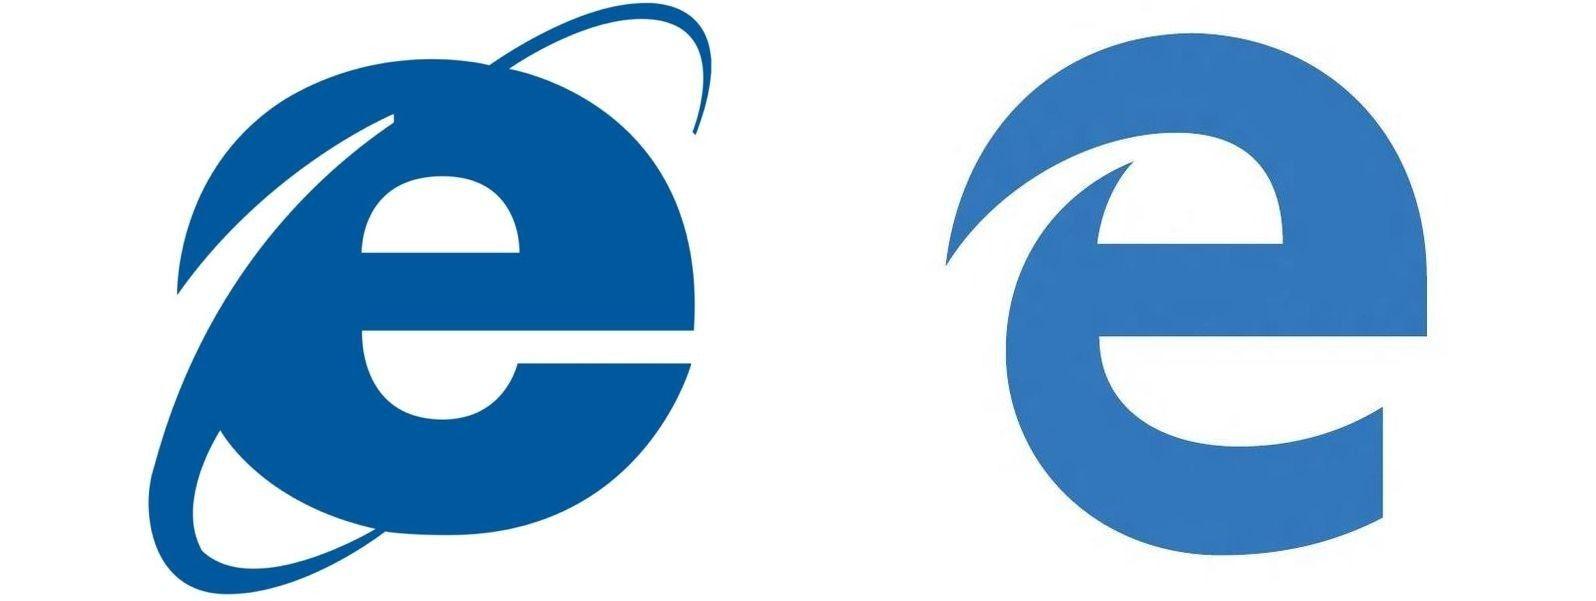 Who Has a Globe Logo - The logo for the Microsoft Edge web browser looks very familiar ...